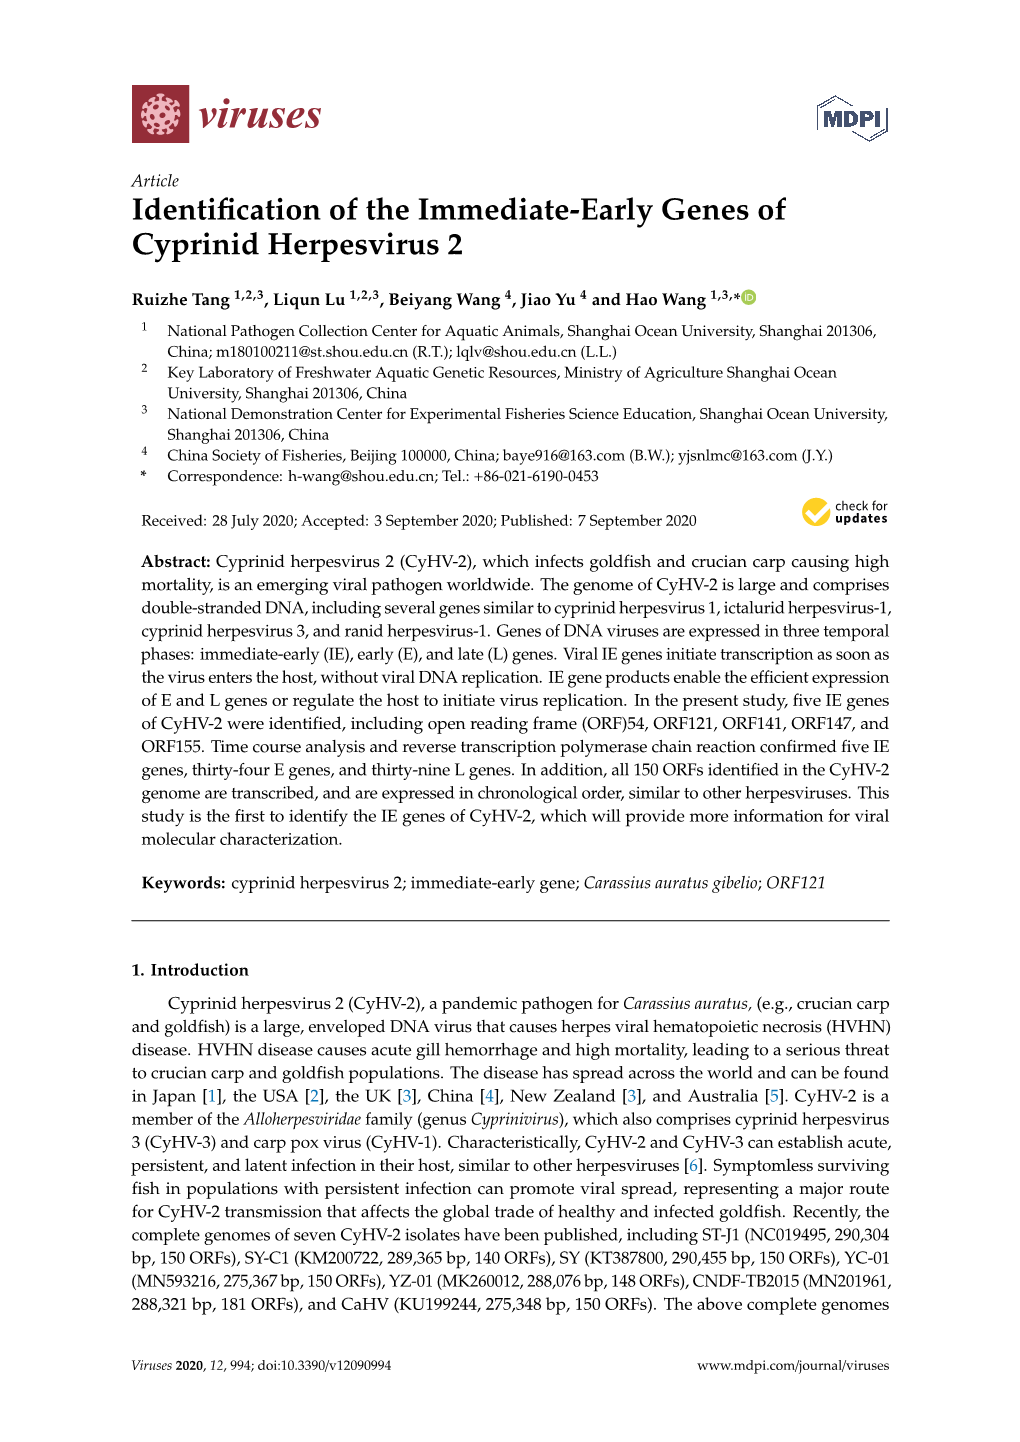 Identification of the Immediate-Early Genes of Cyprinid Herpesvirus 2